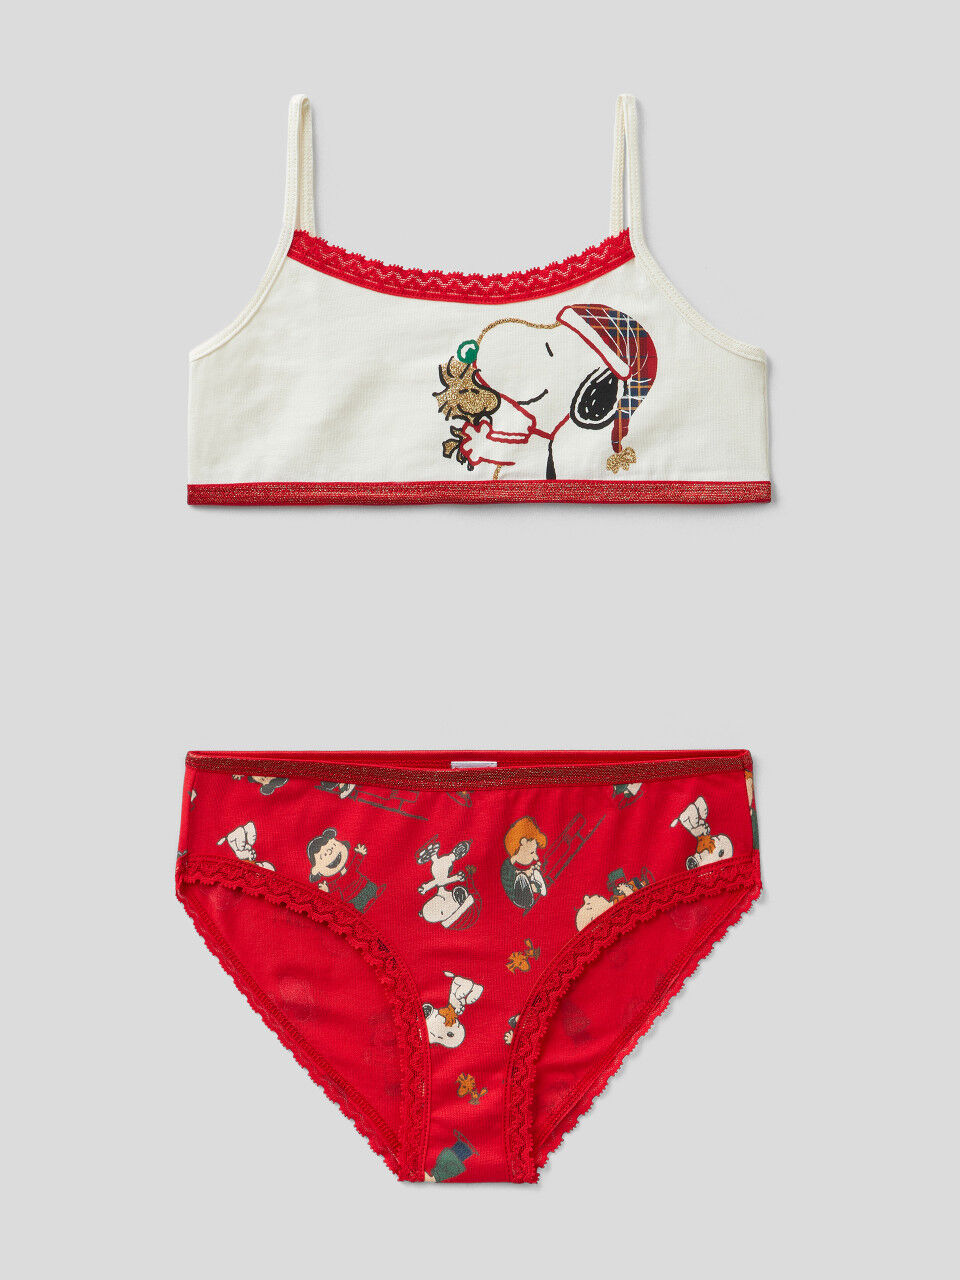 Peanuts underwear and bra set